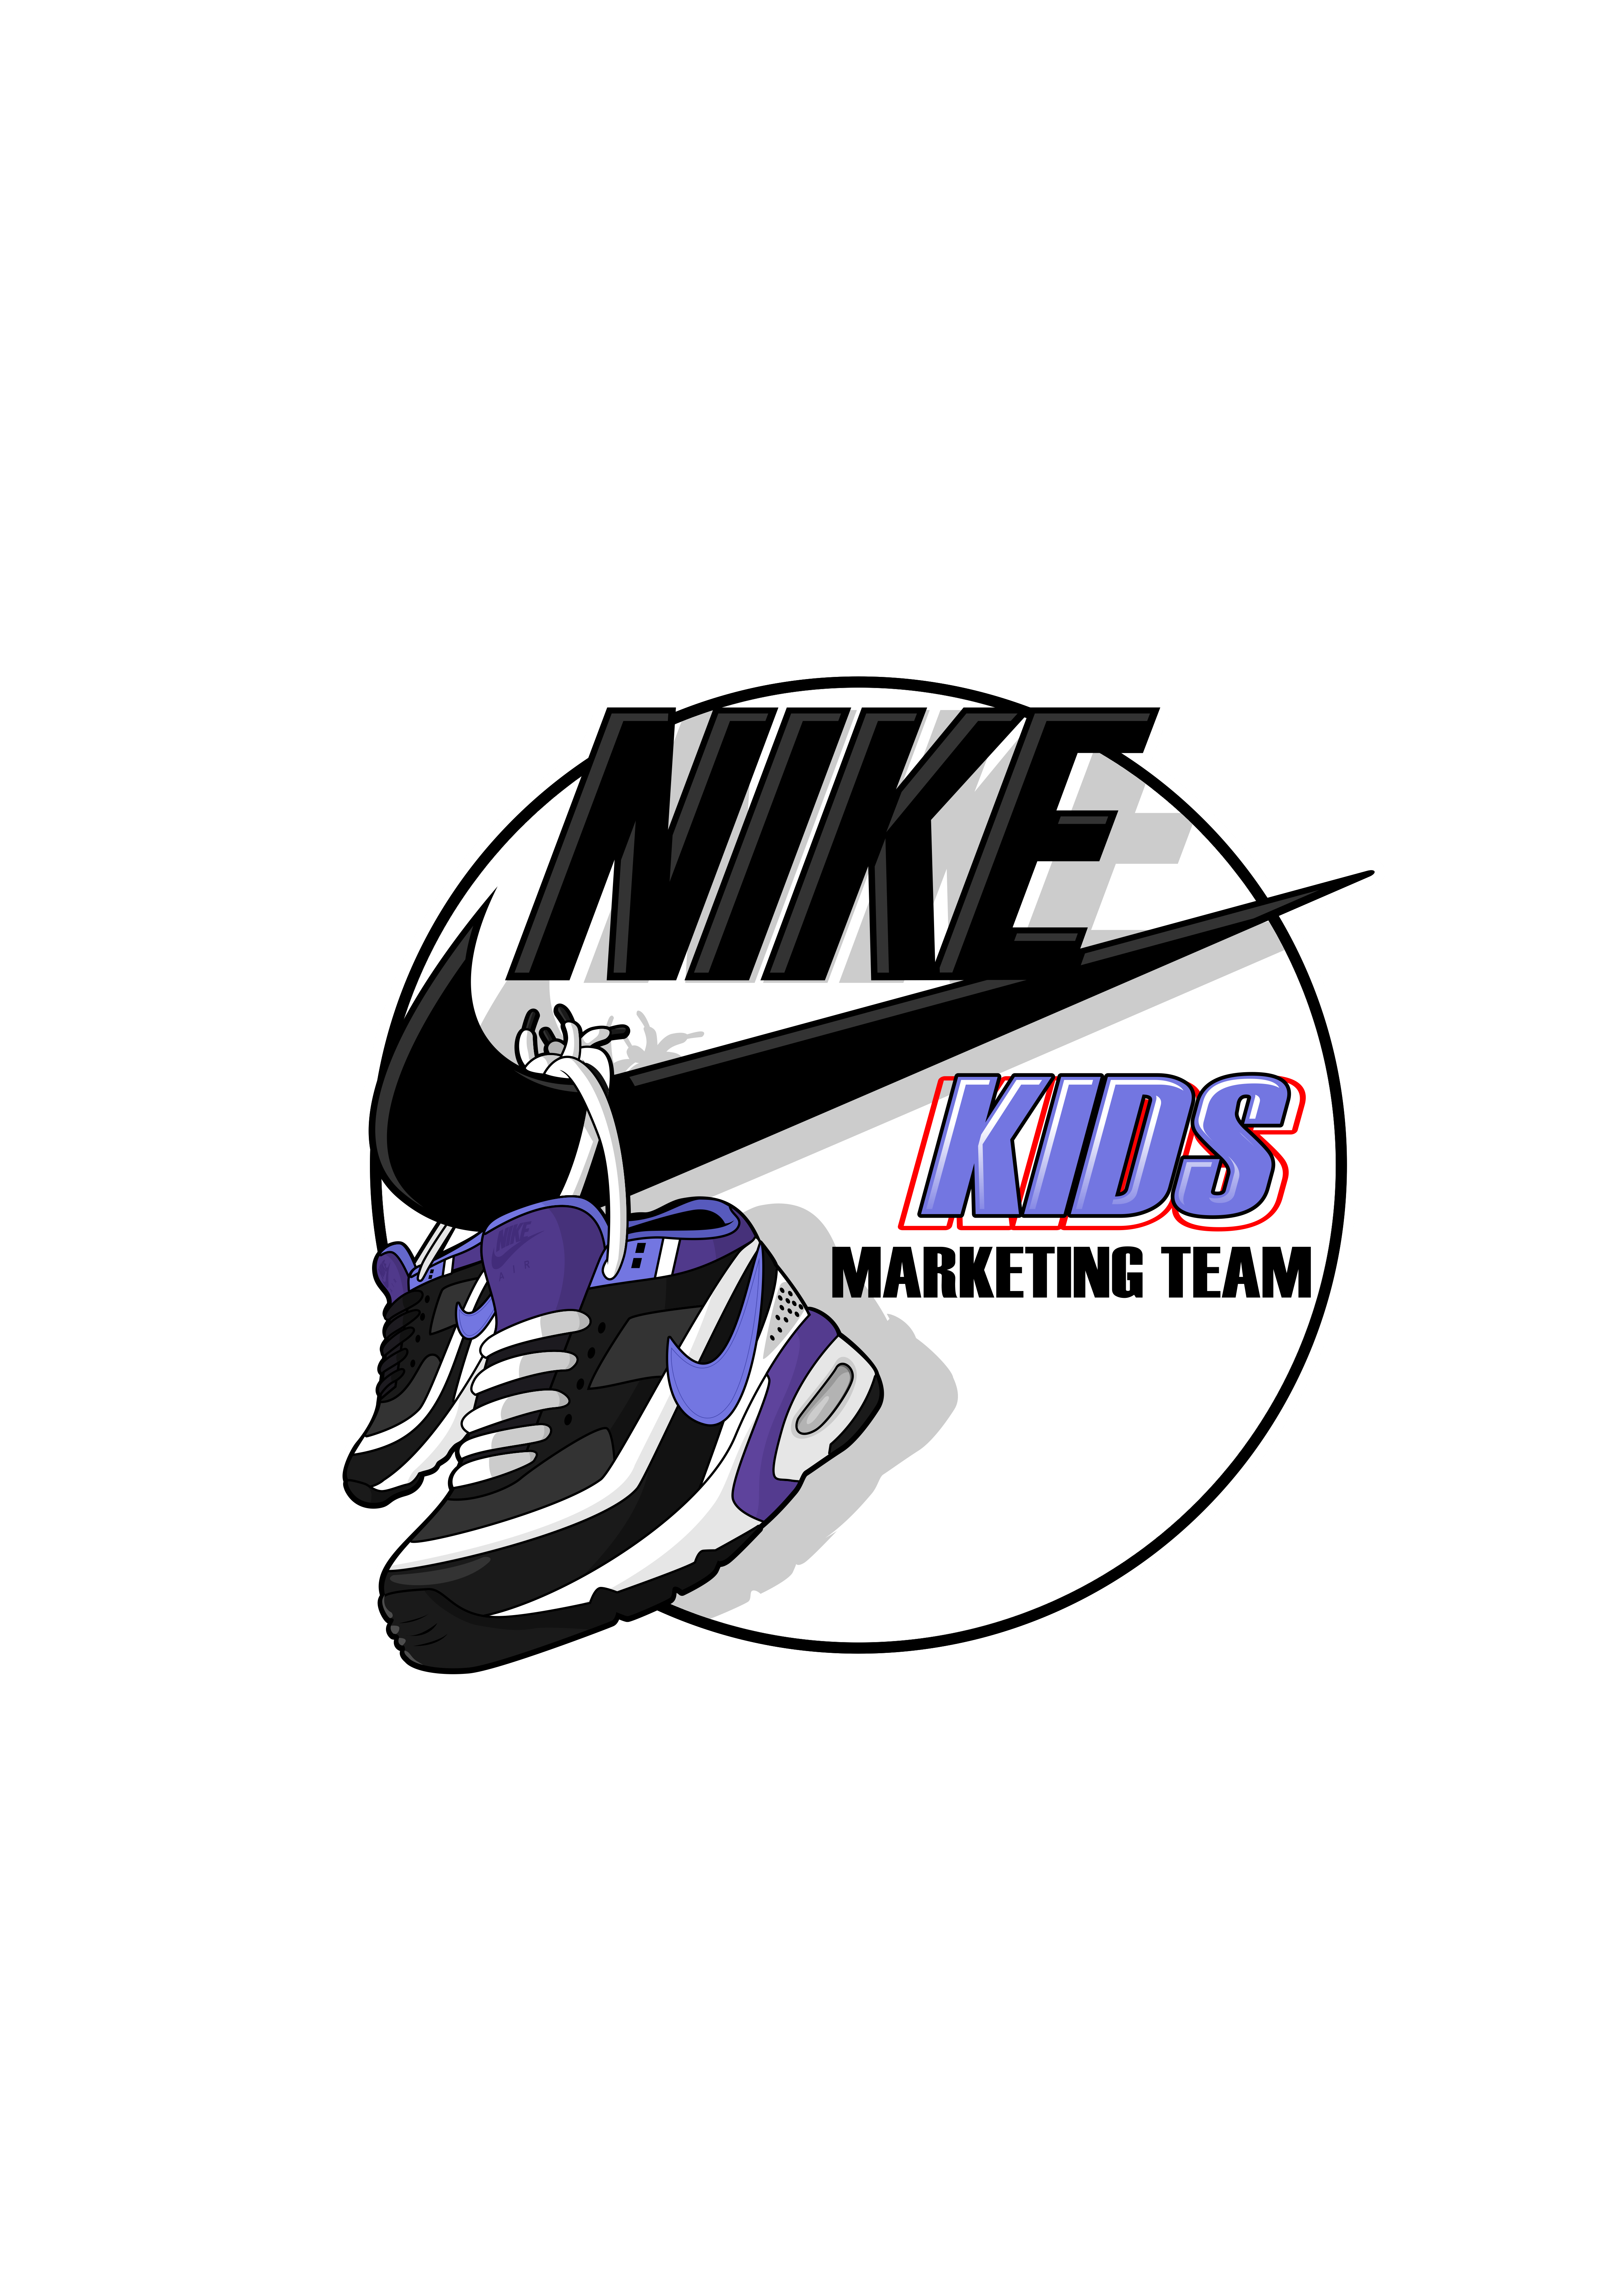 nike kids marketing team logo